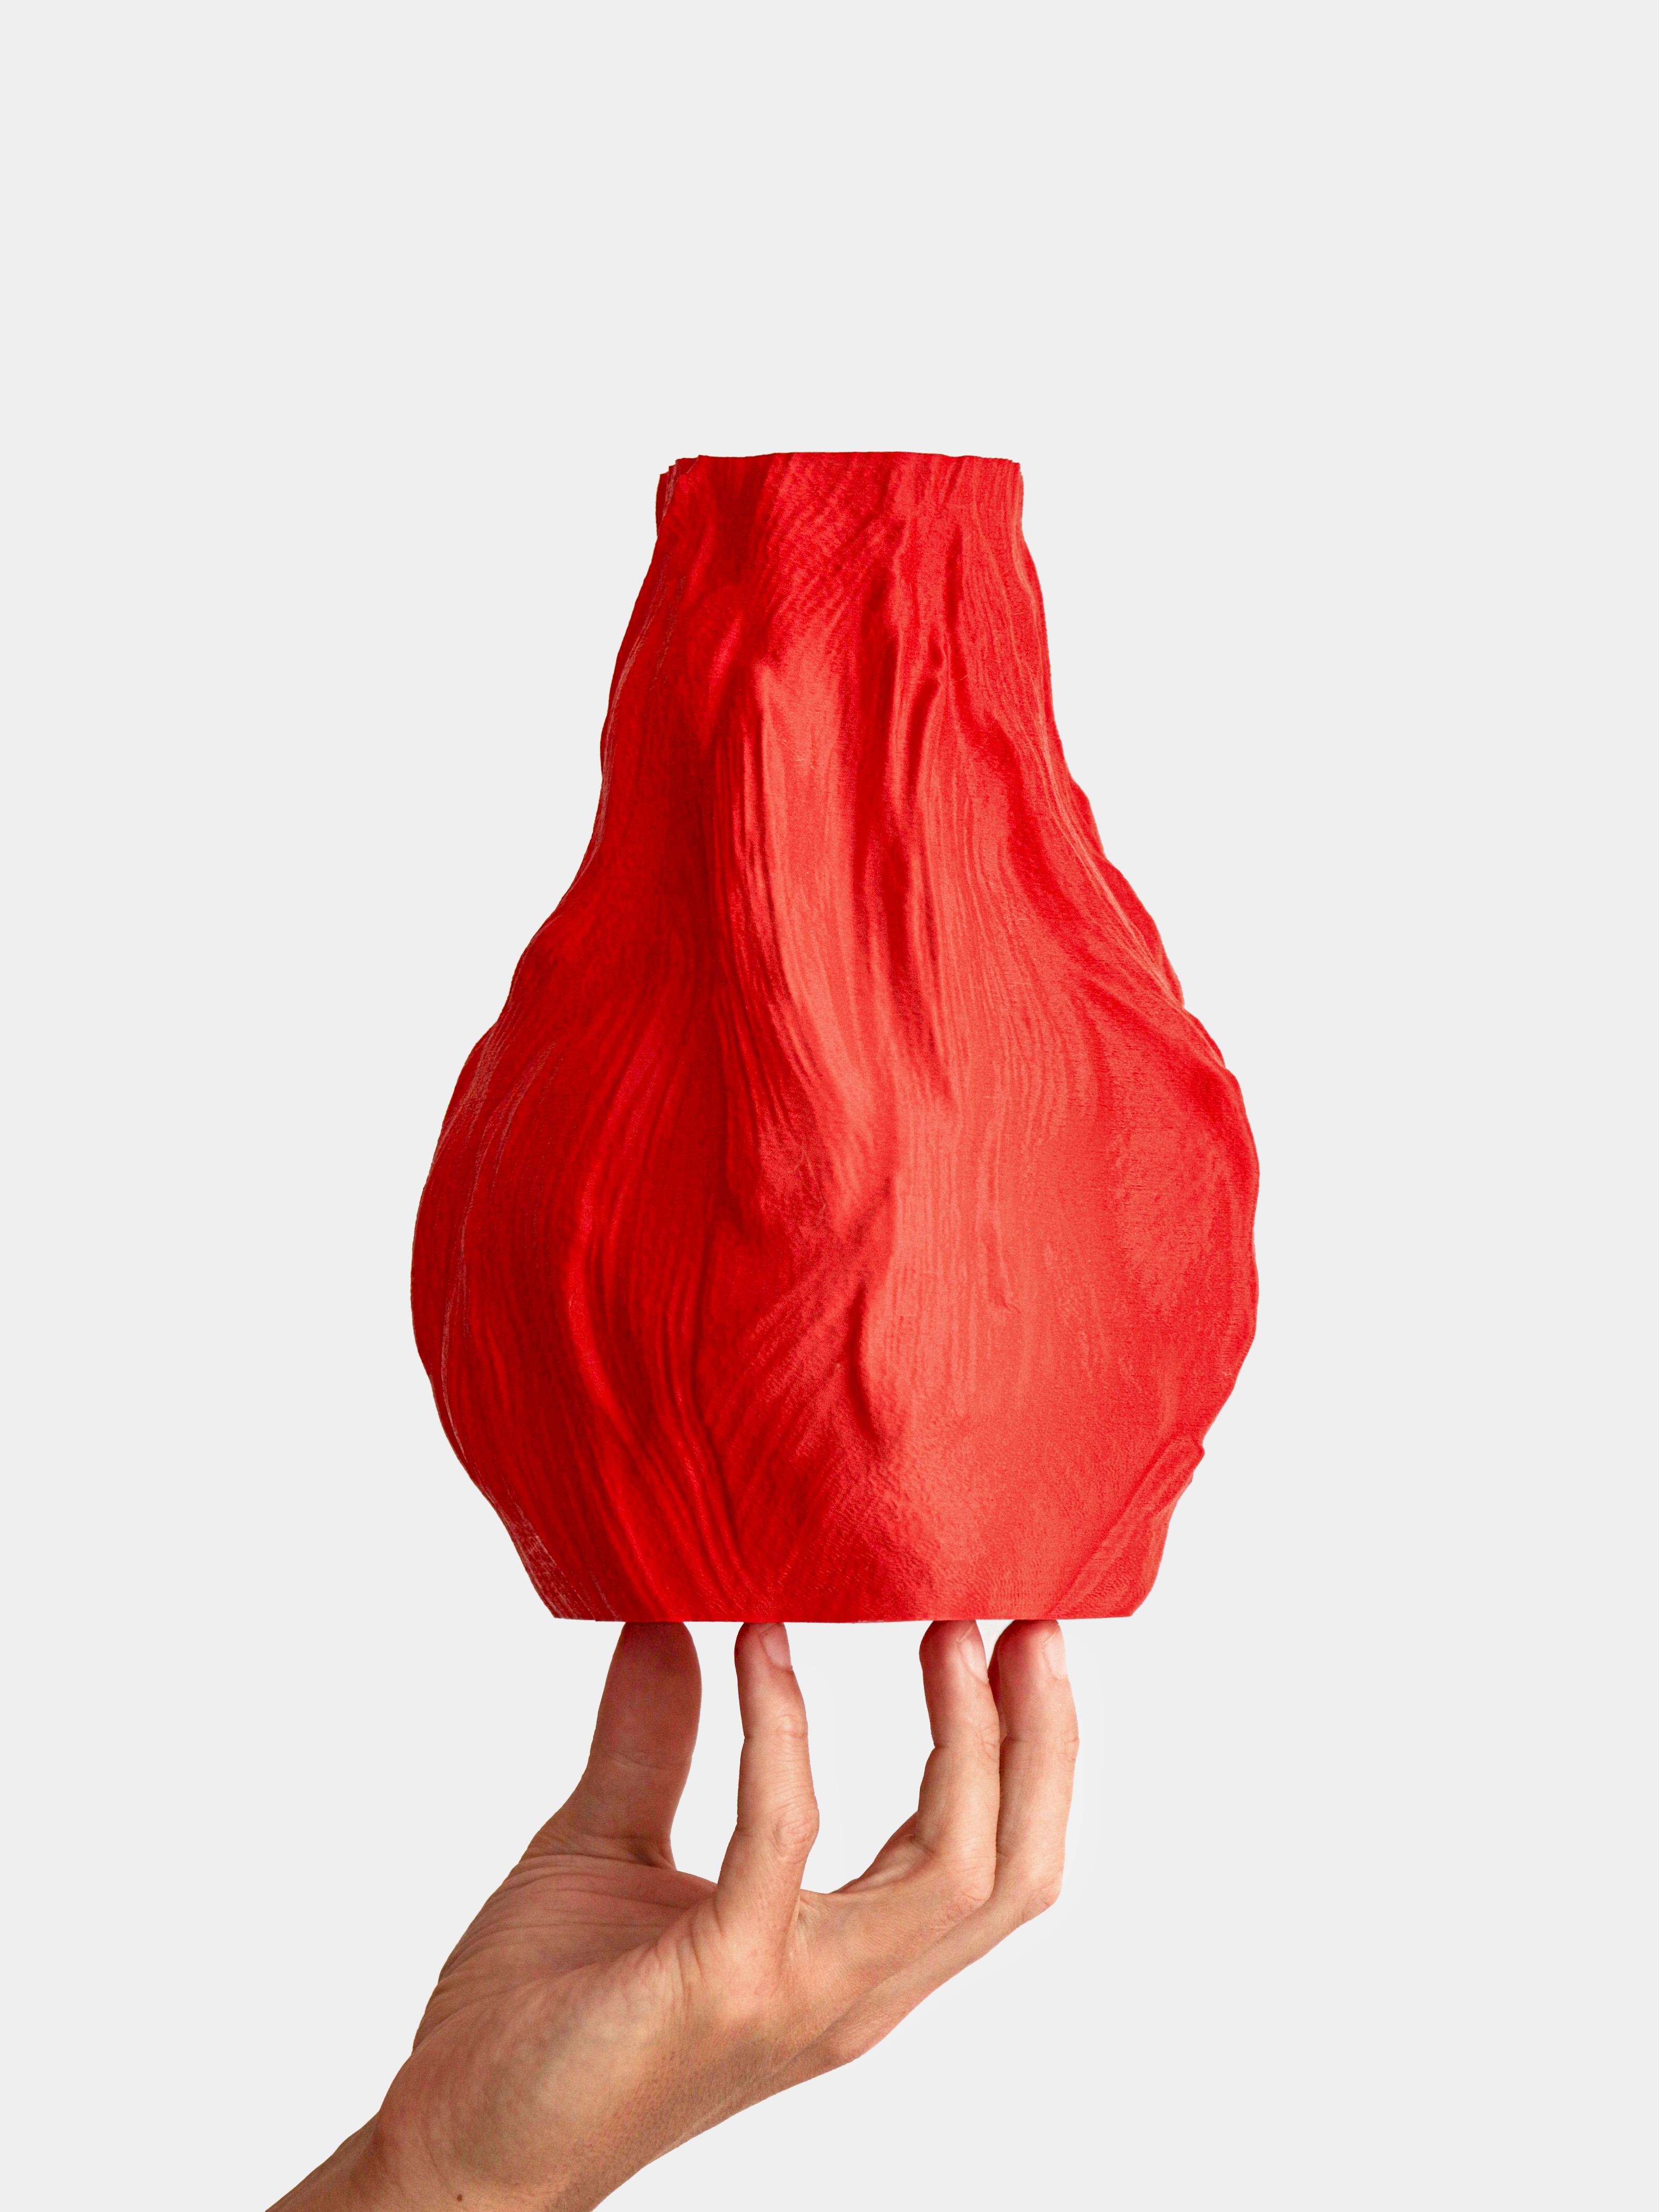 Atalanta Vase | Embodied ideas collection 3d model